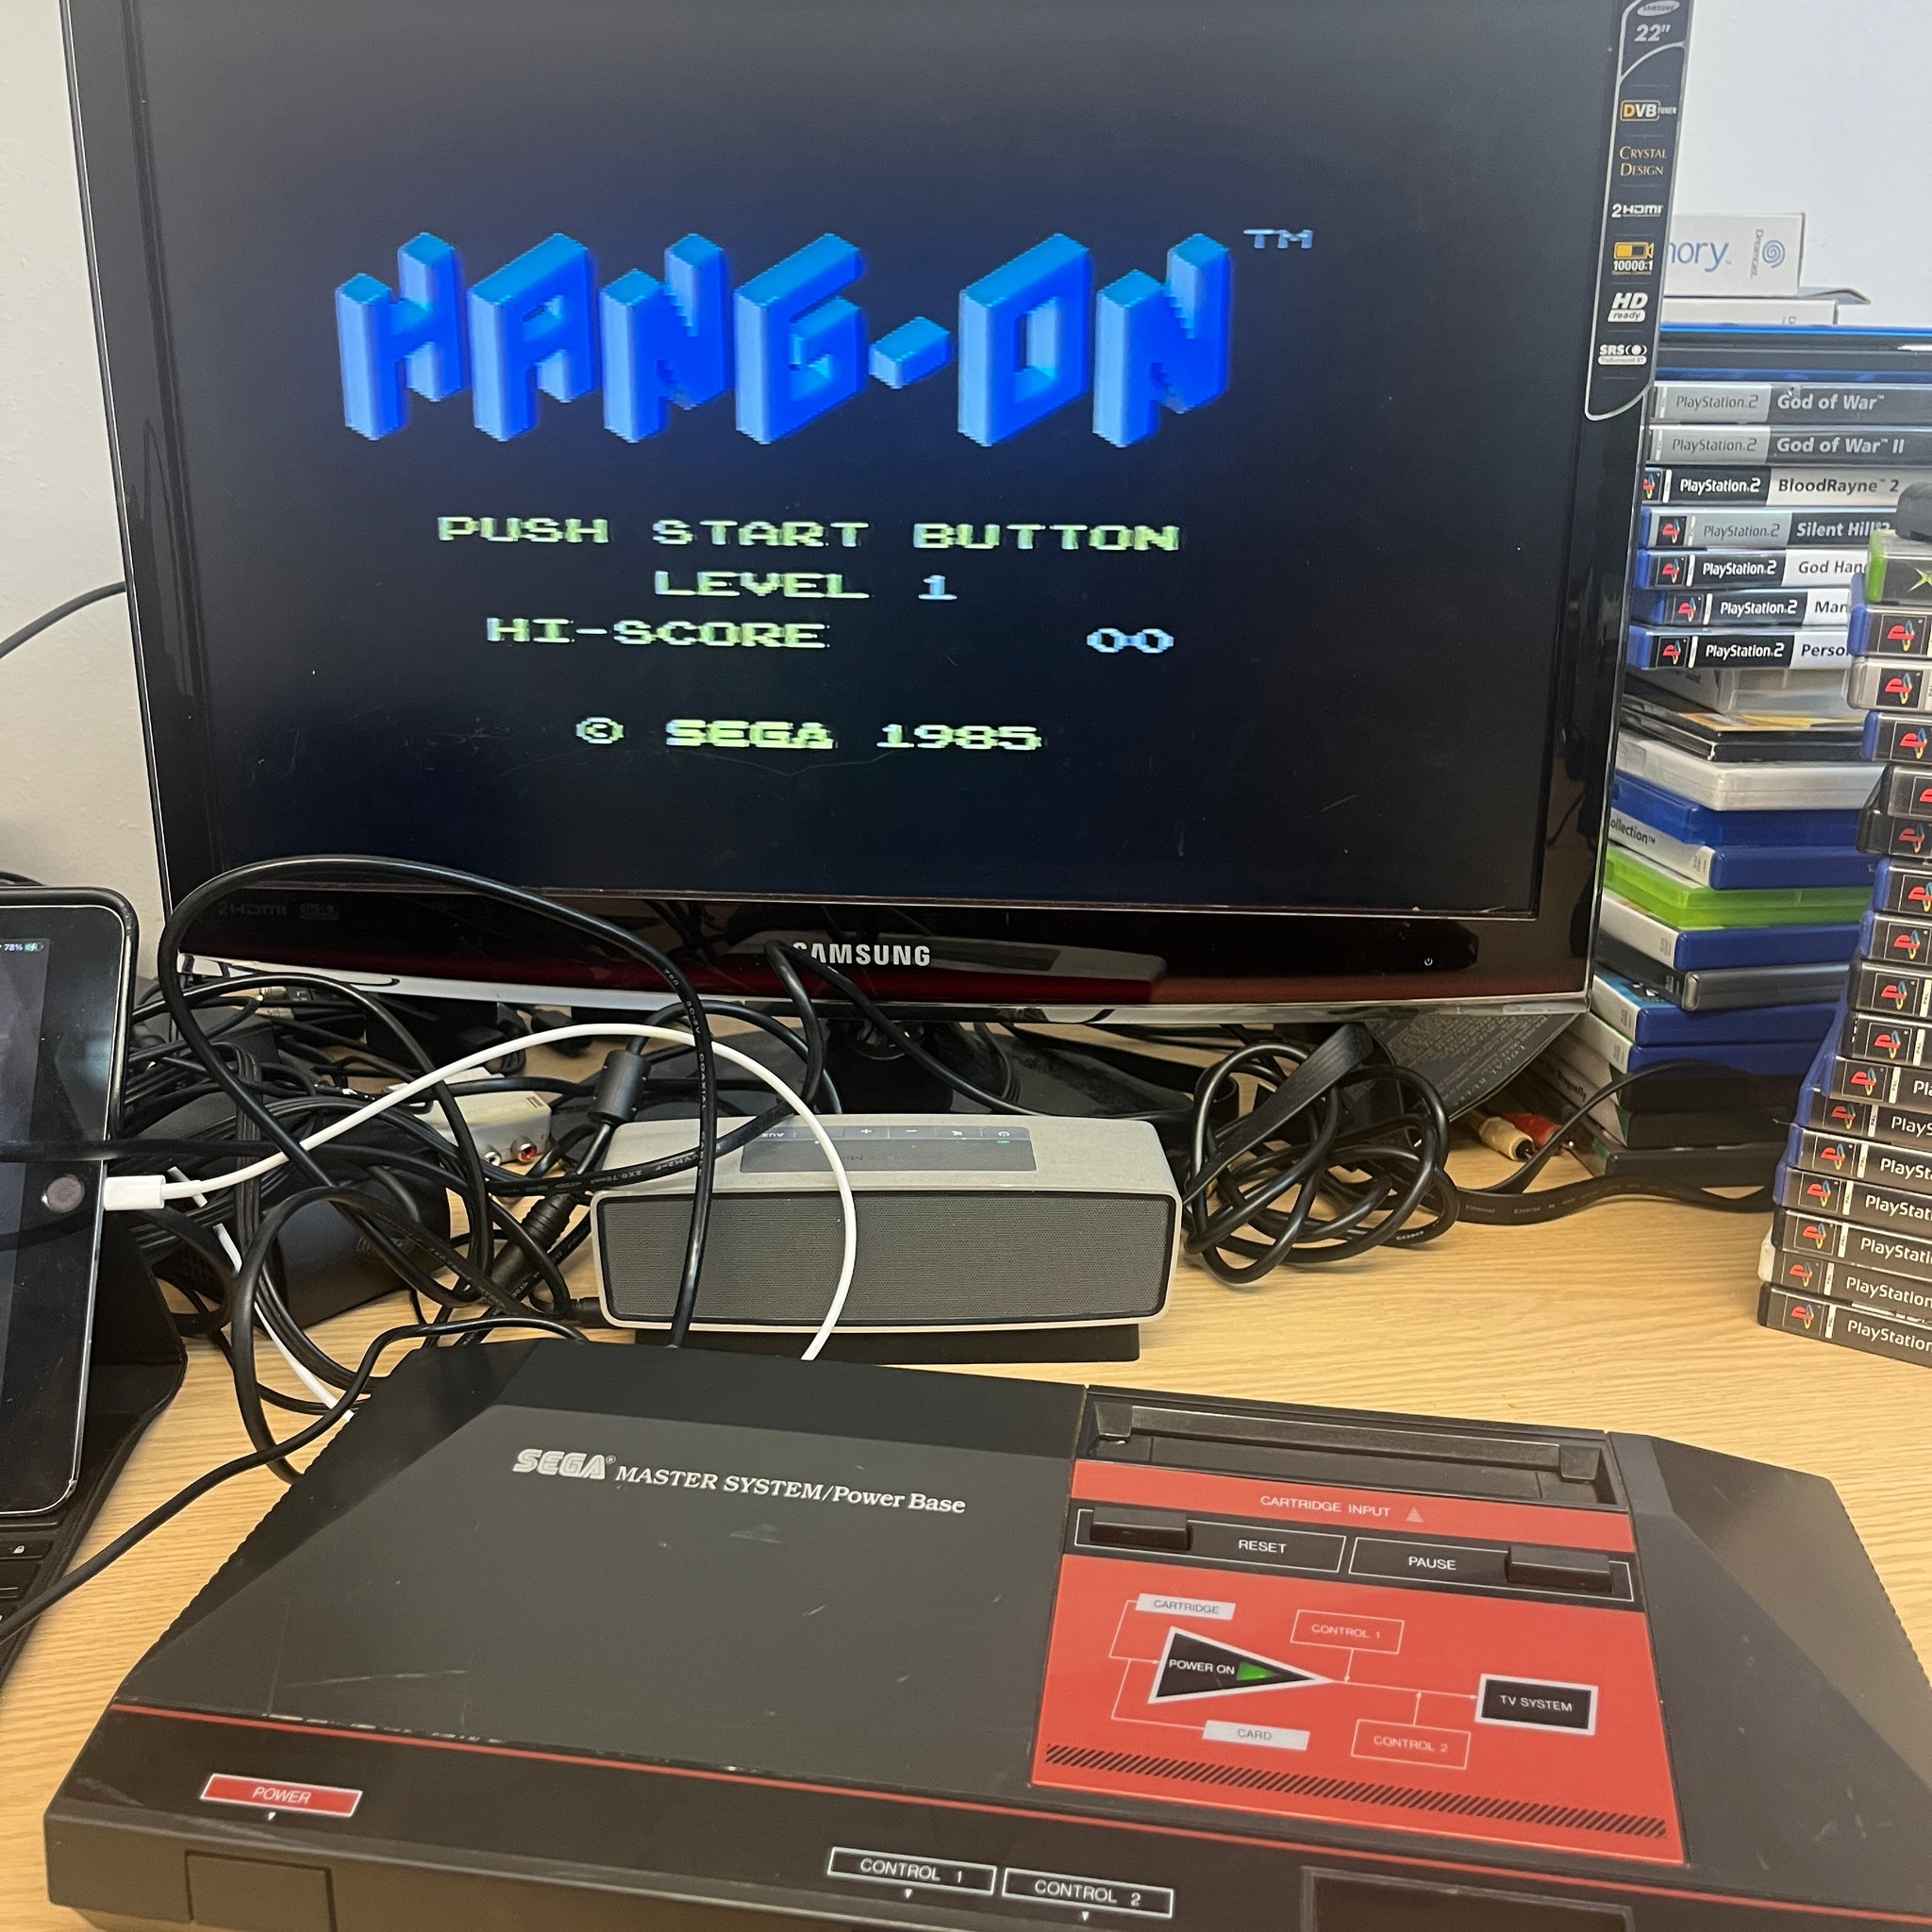 Sega Master System Console model 1 - Hang On built in